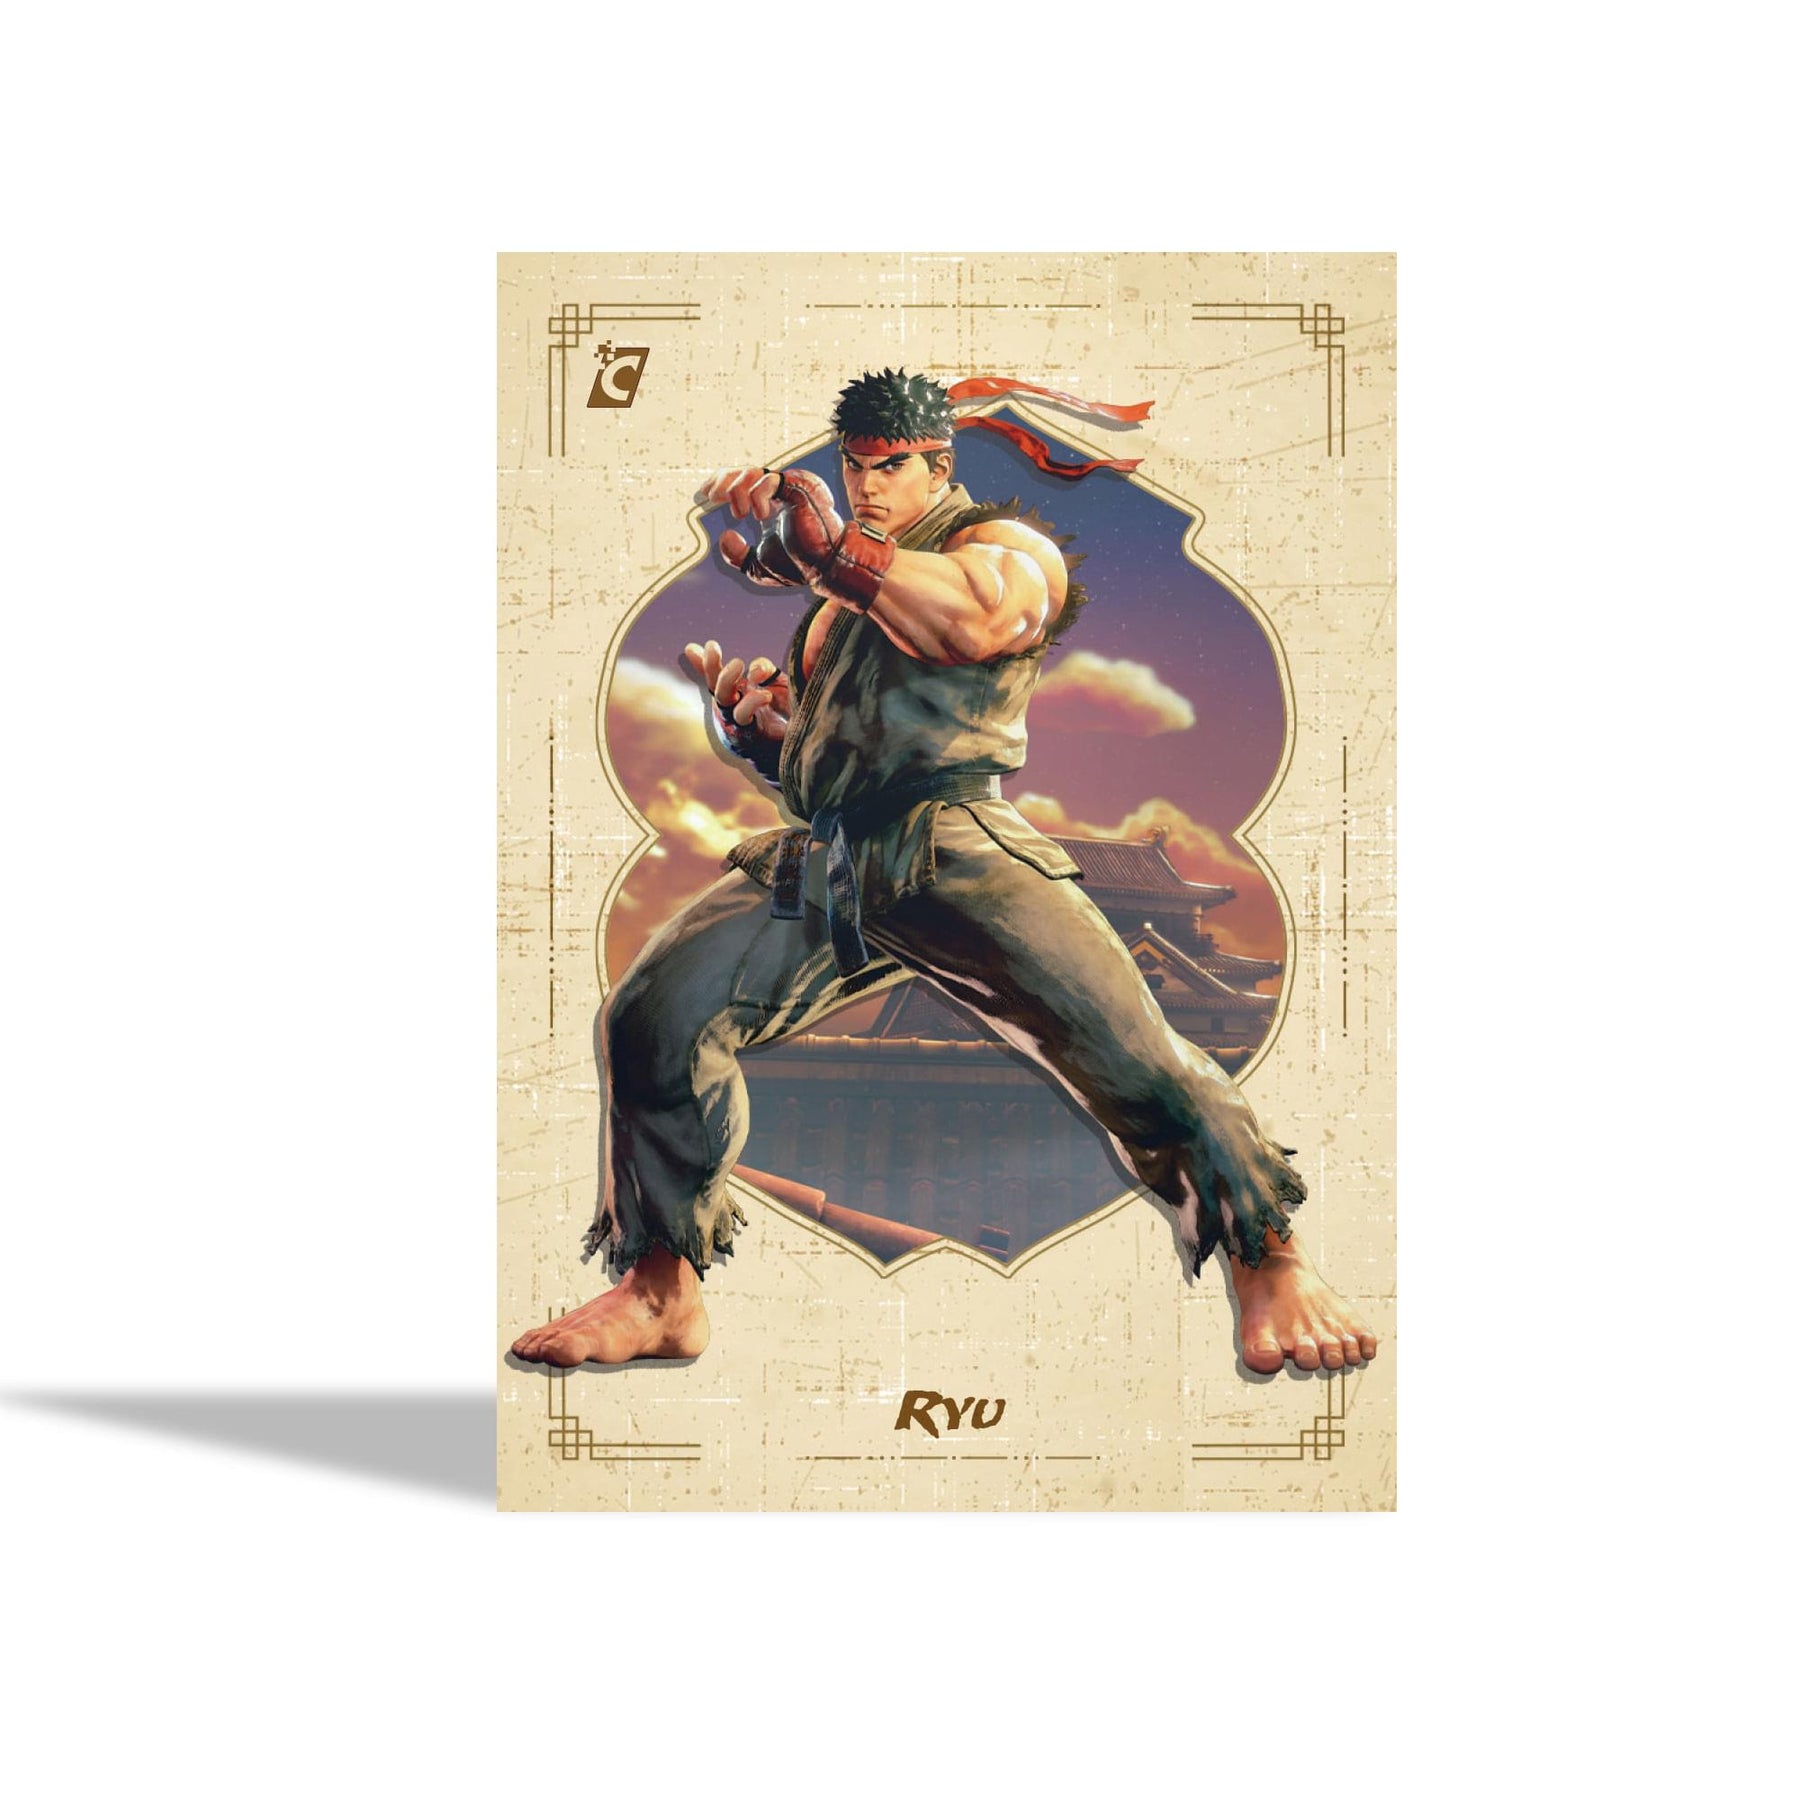 11 RYU Street Fighter III Strike capcom game Kellogg Company Card Back  Melvin